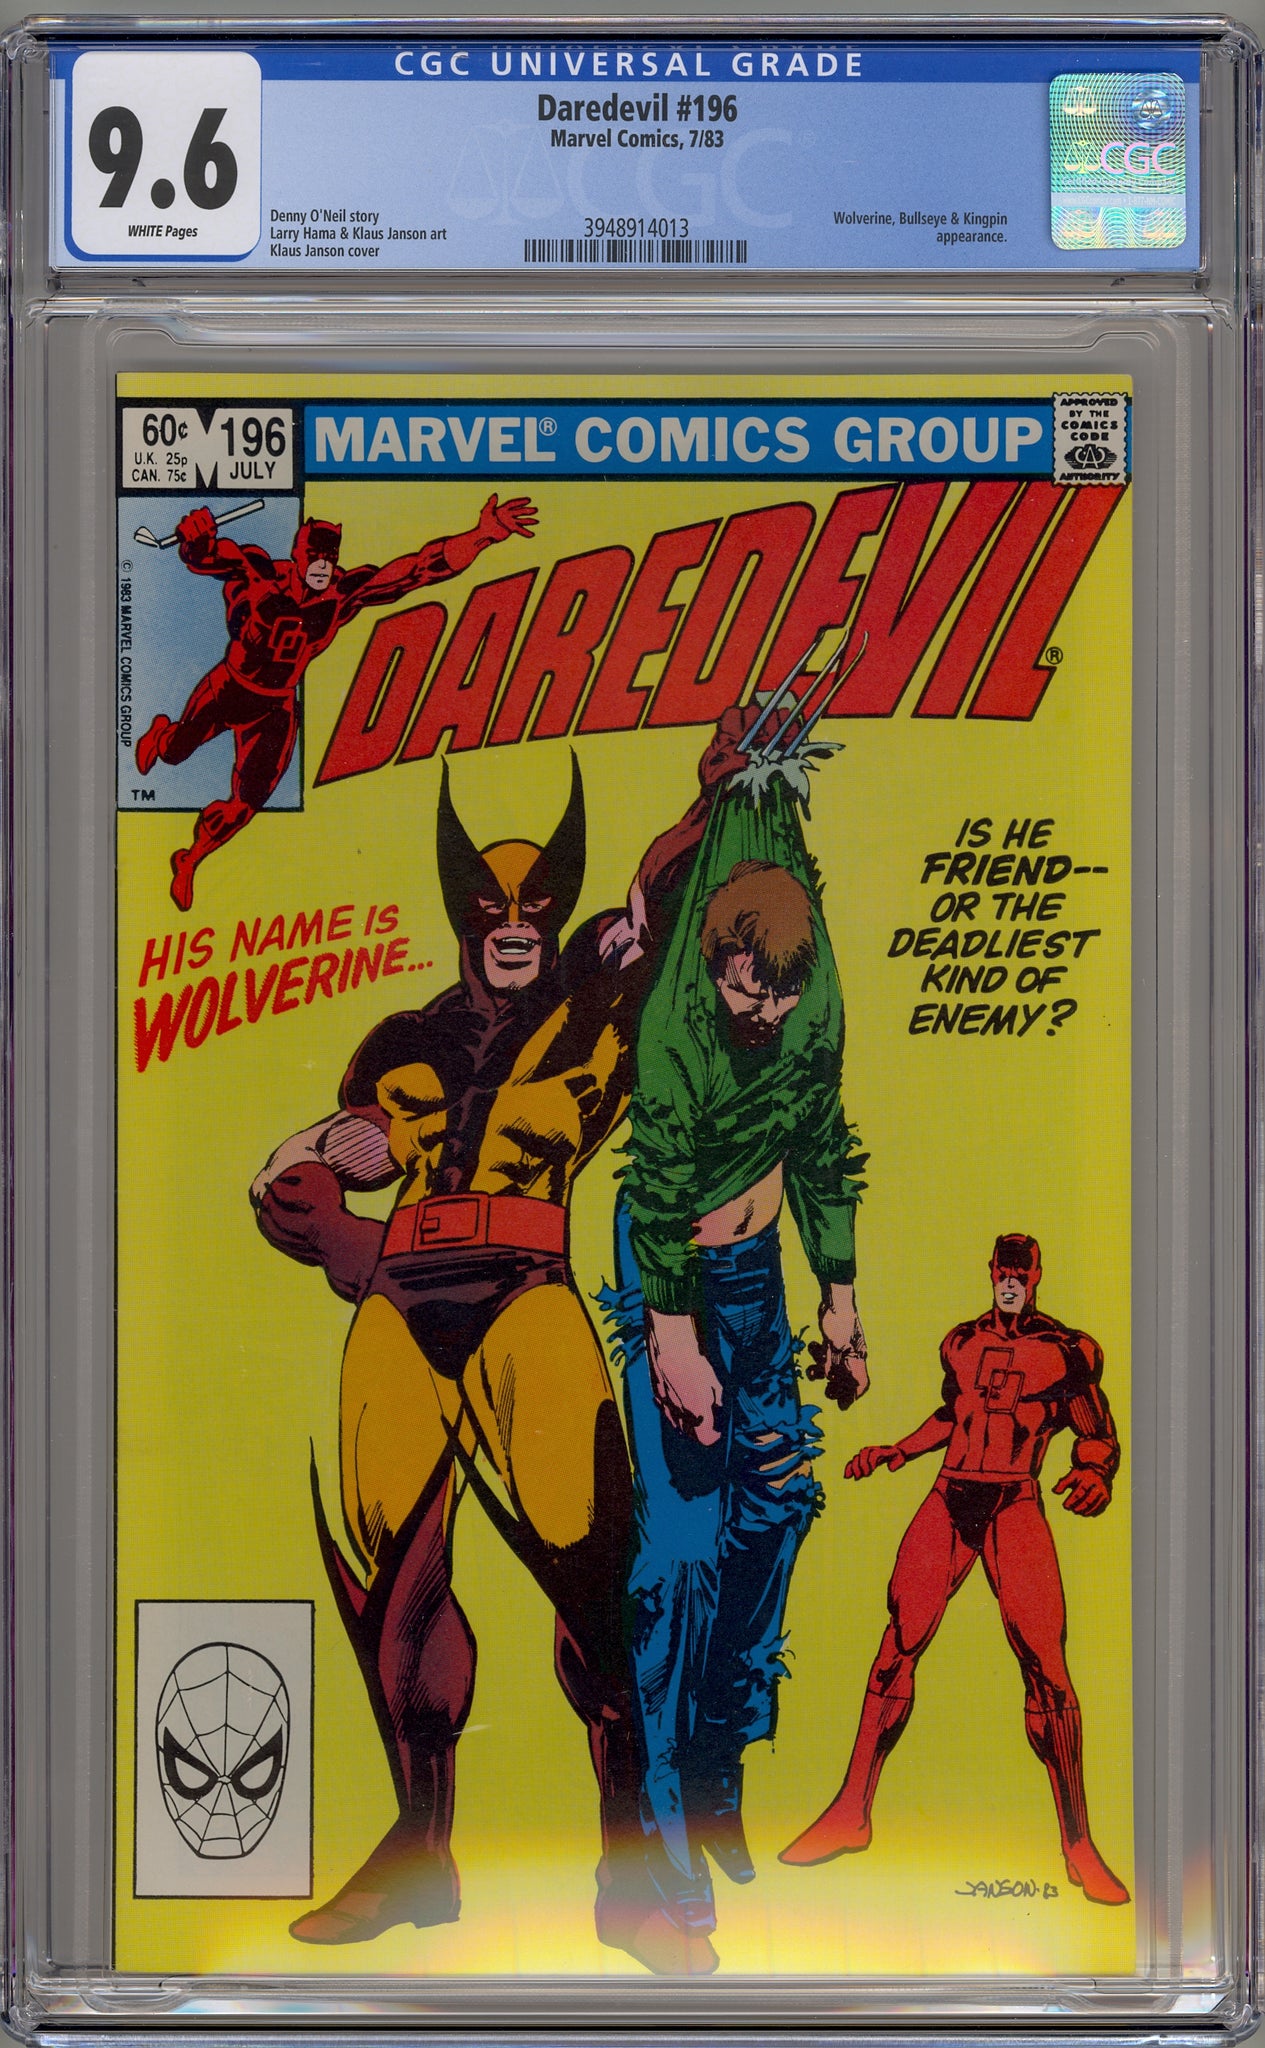 Daredevil #196 (1983) Wolverine